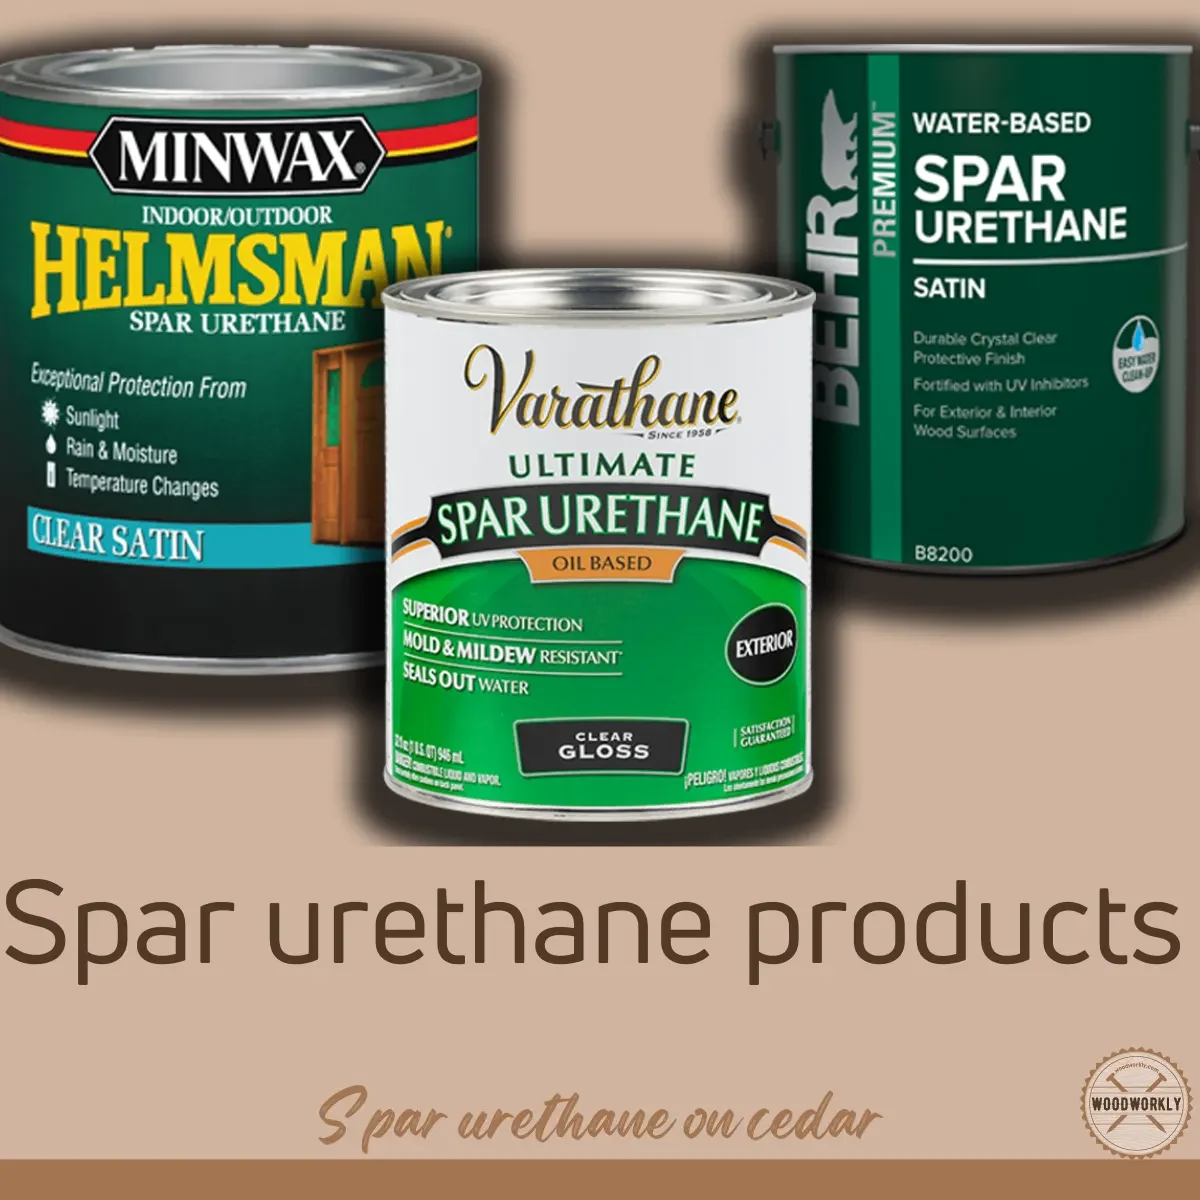 Spar urethane products